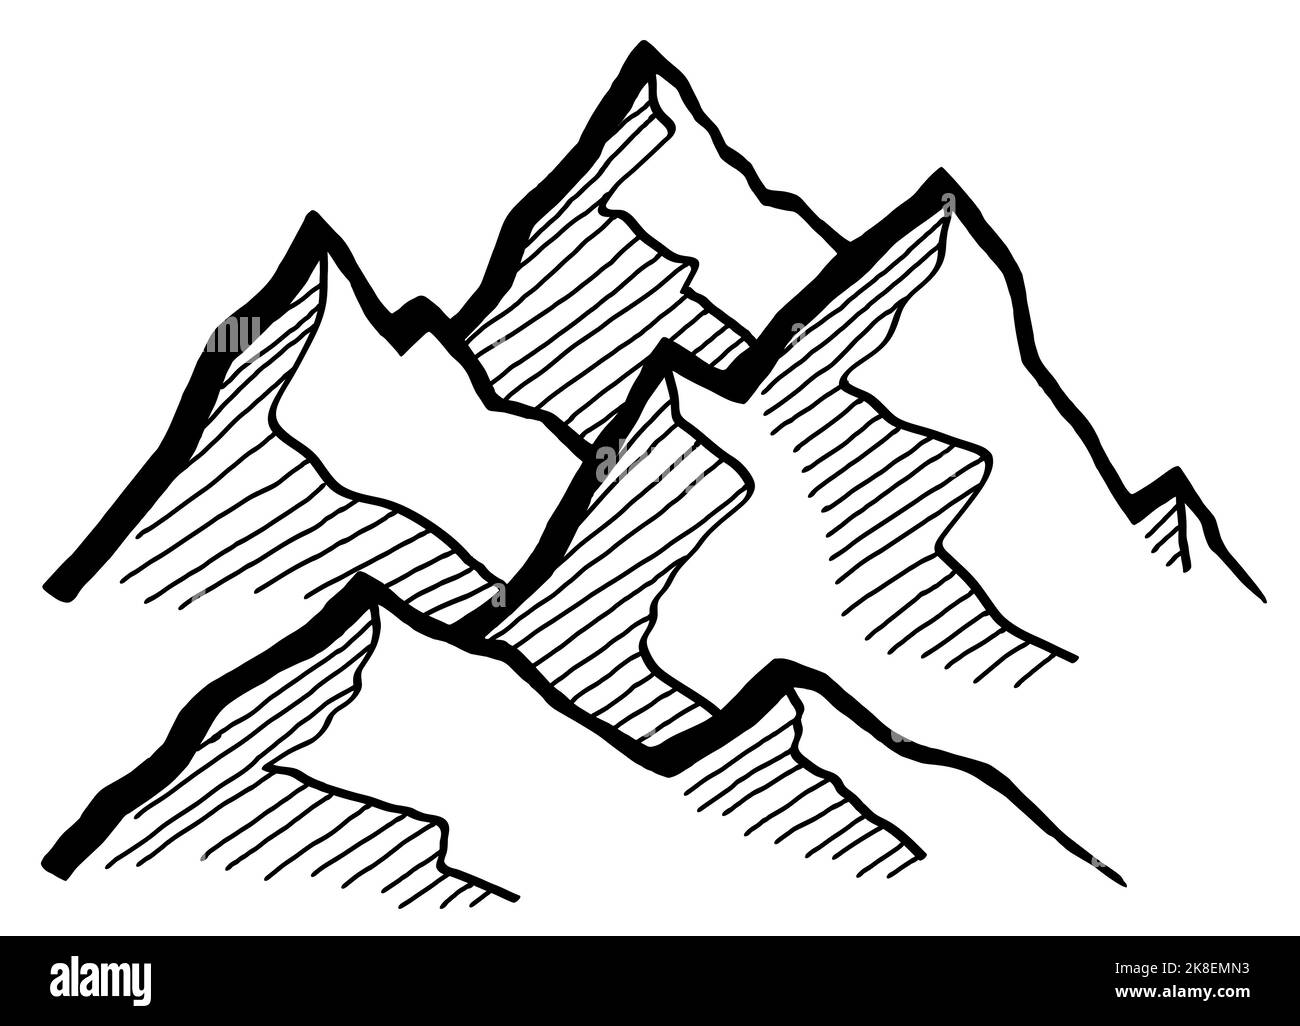 Berge Grafik schwarz weiß Landschaft Skizze Illustration Vektor Stock Vektor